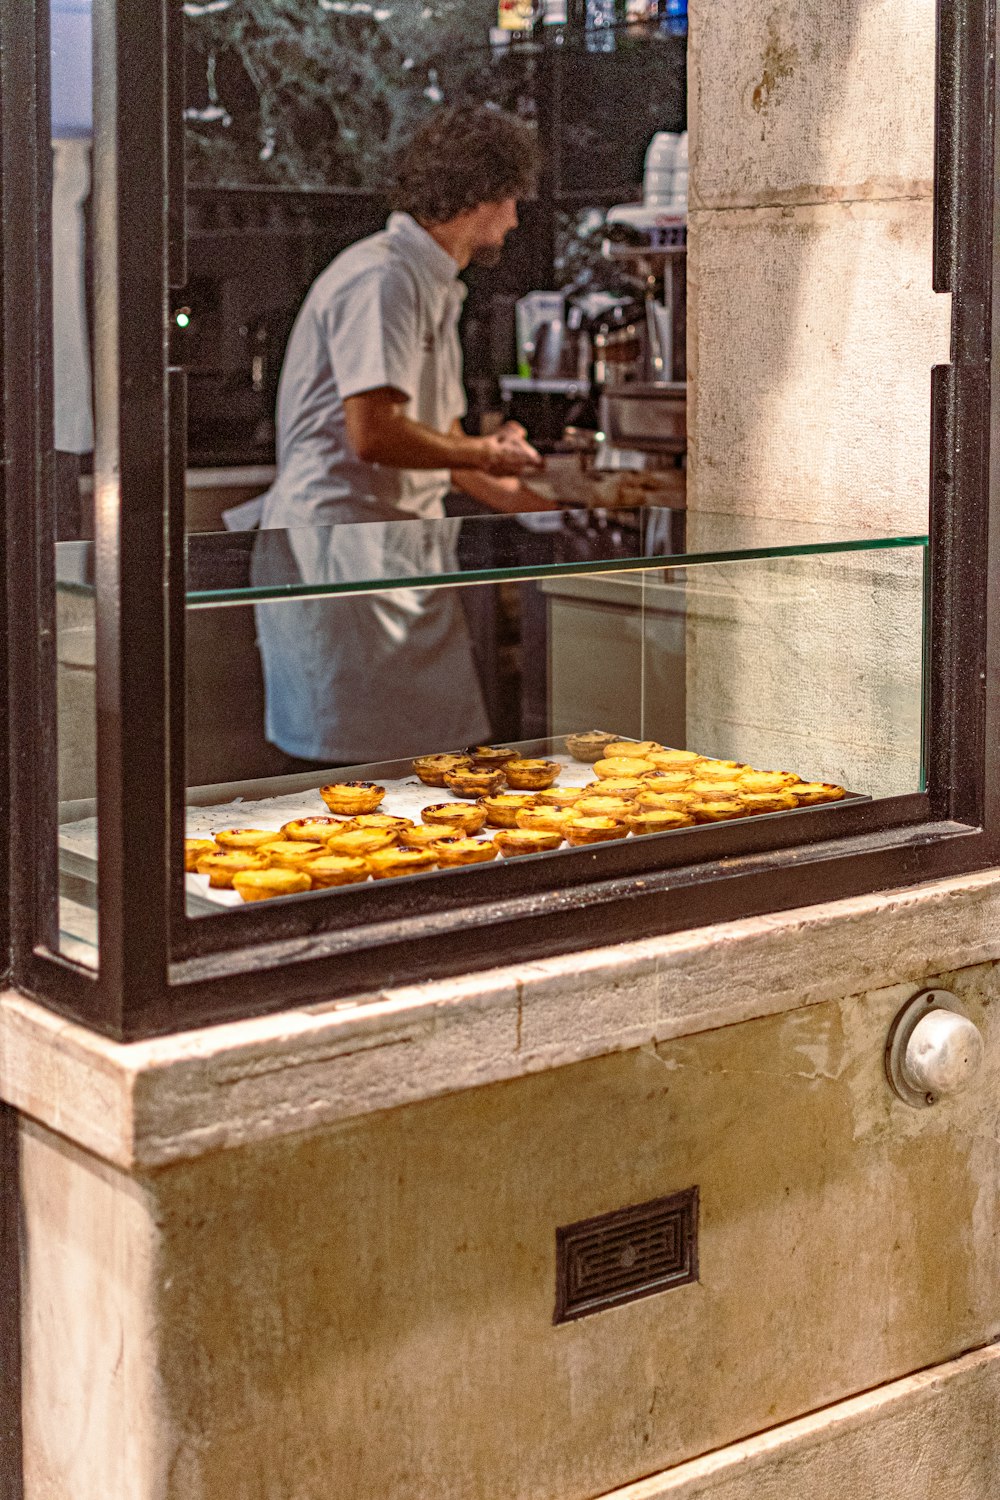 Un hombre preparando comida detrás de un mostrador de cristal